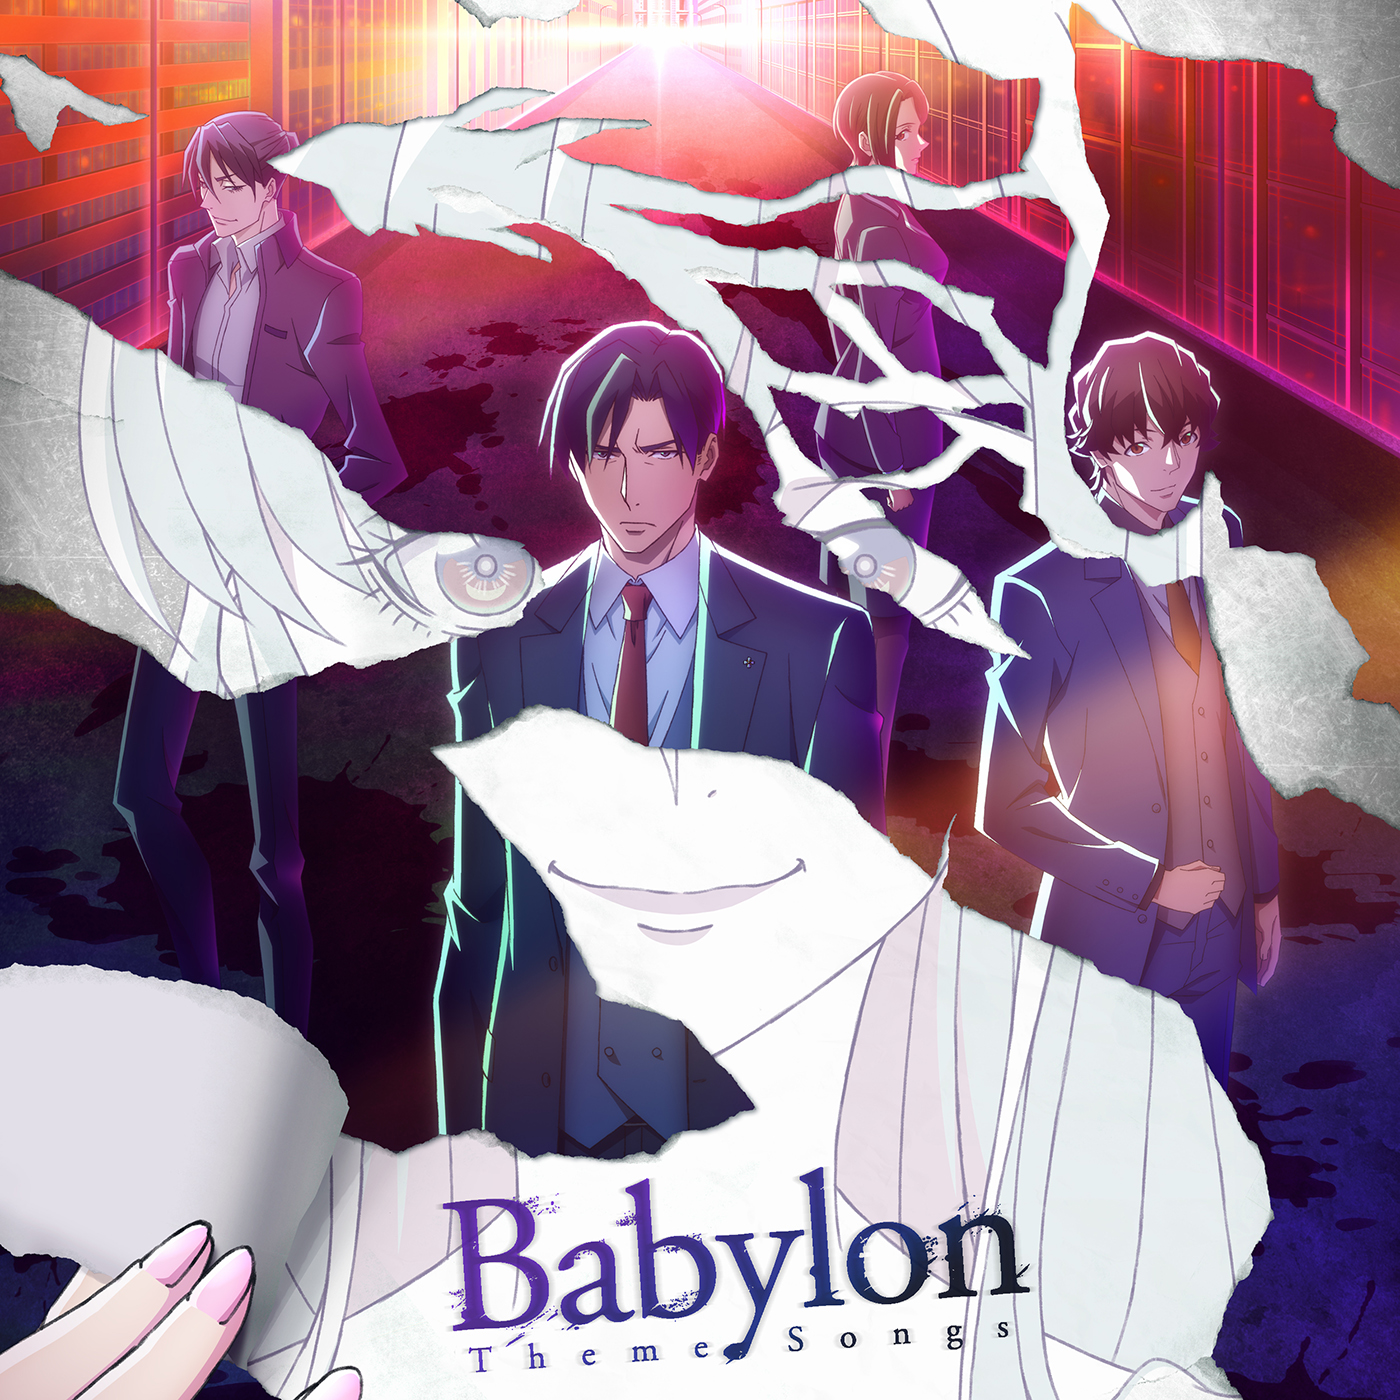 Babylon Theme Songs - Osanime